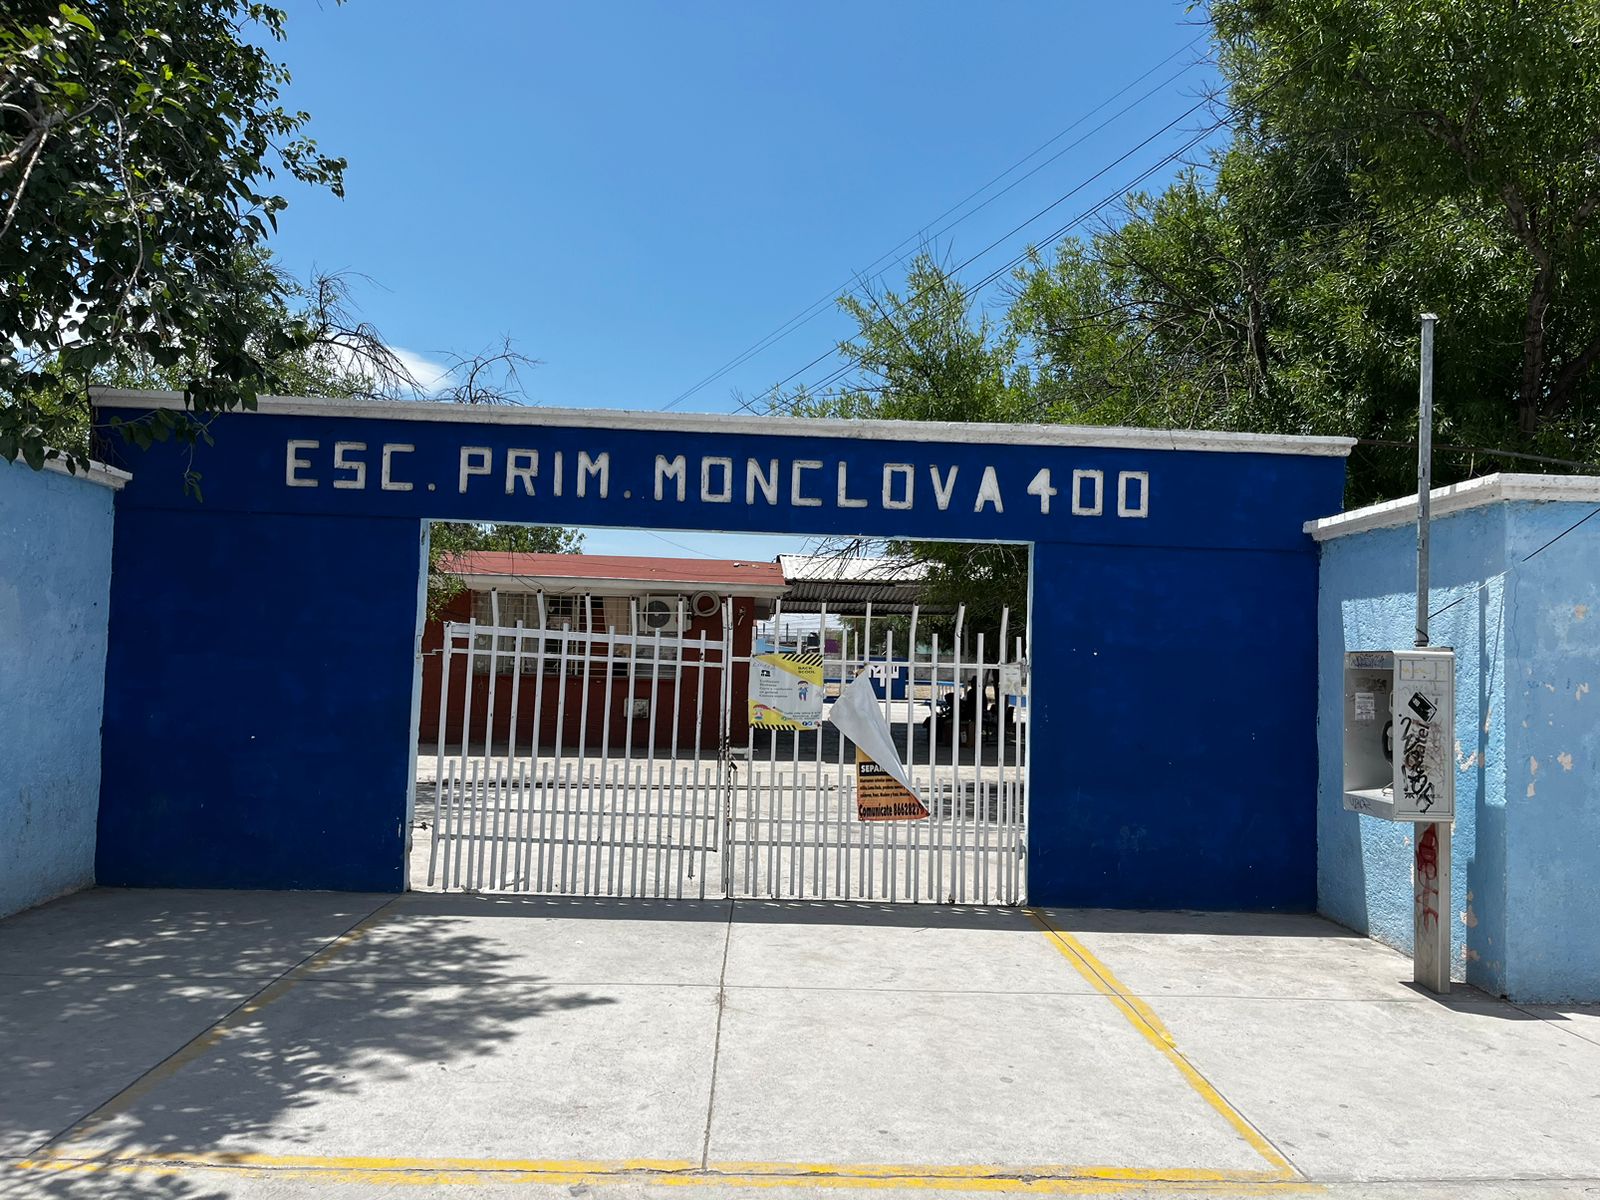 Alumnos y docentes presentan golpe de calor en escuela de Monclova